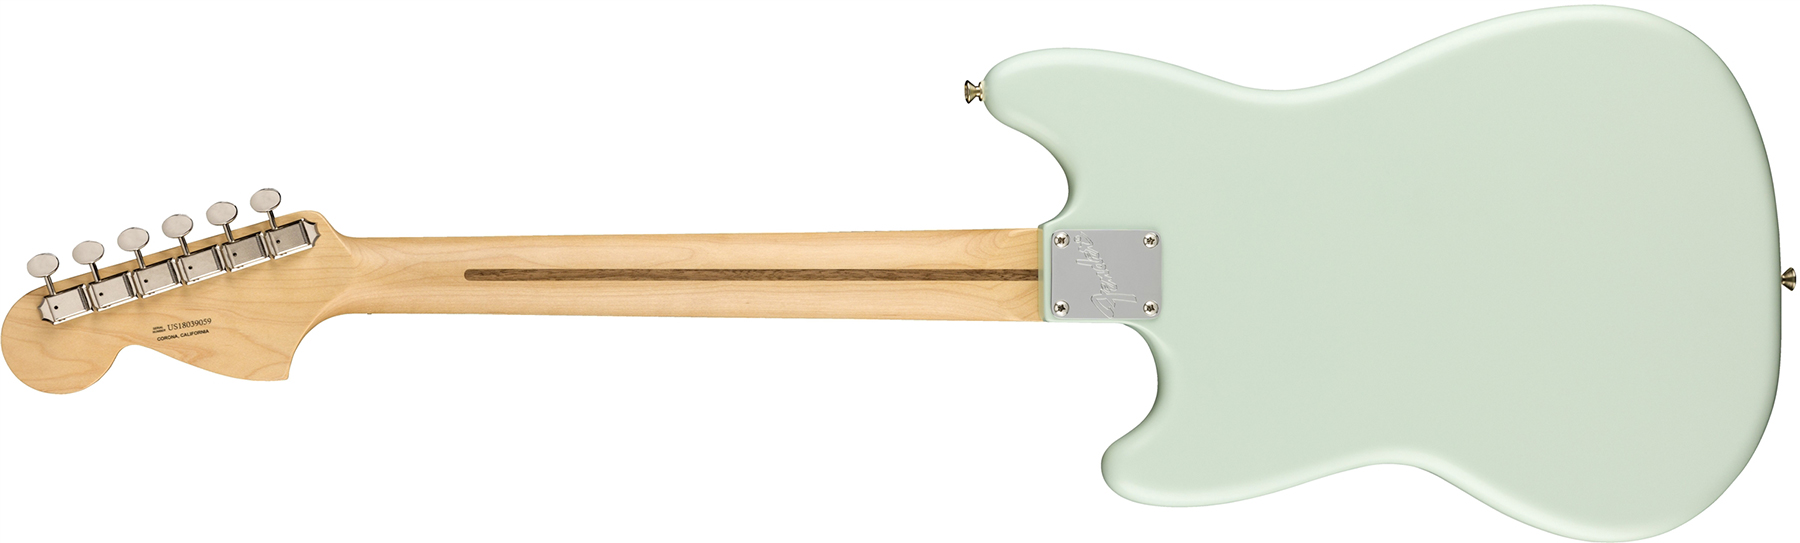 Fender Mustang American Performer Usa Ss Rw - Satin Sonic Blue - Guitarra eléctrica de doble corte - Variation 1